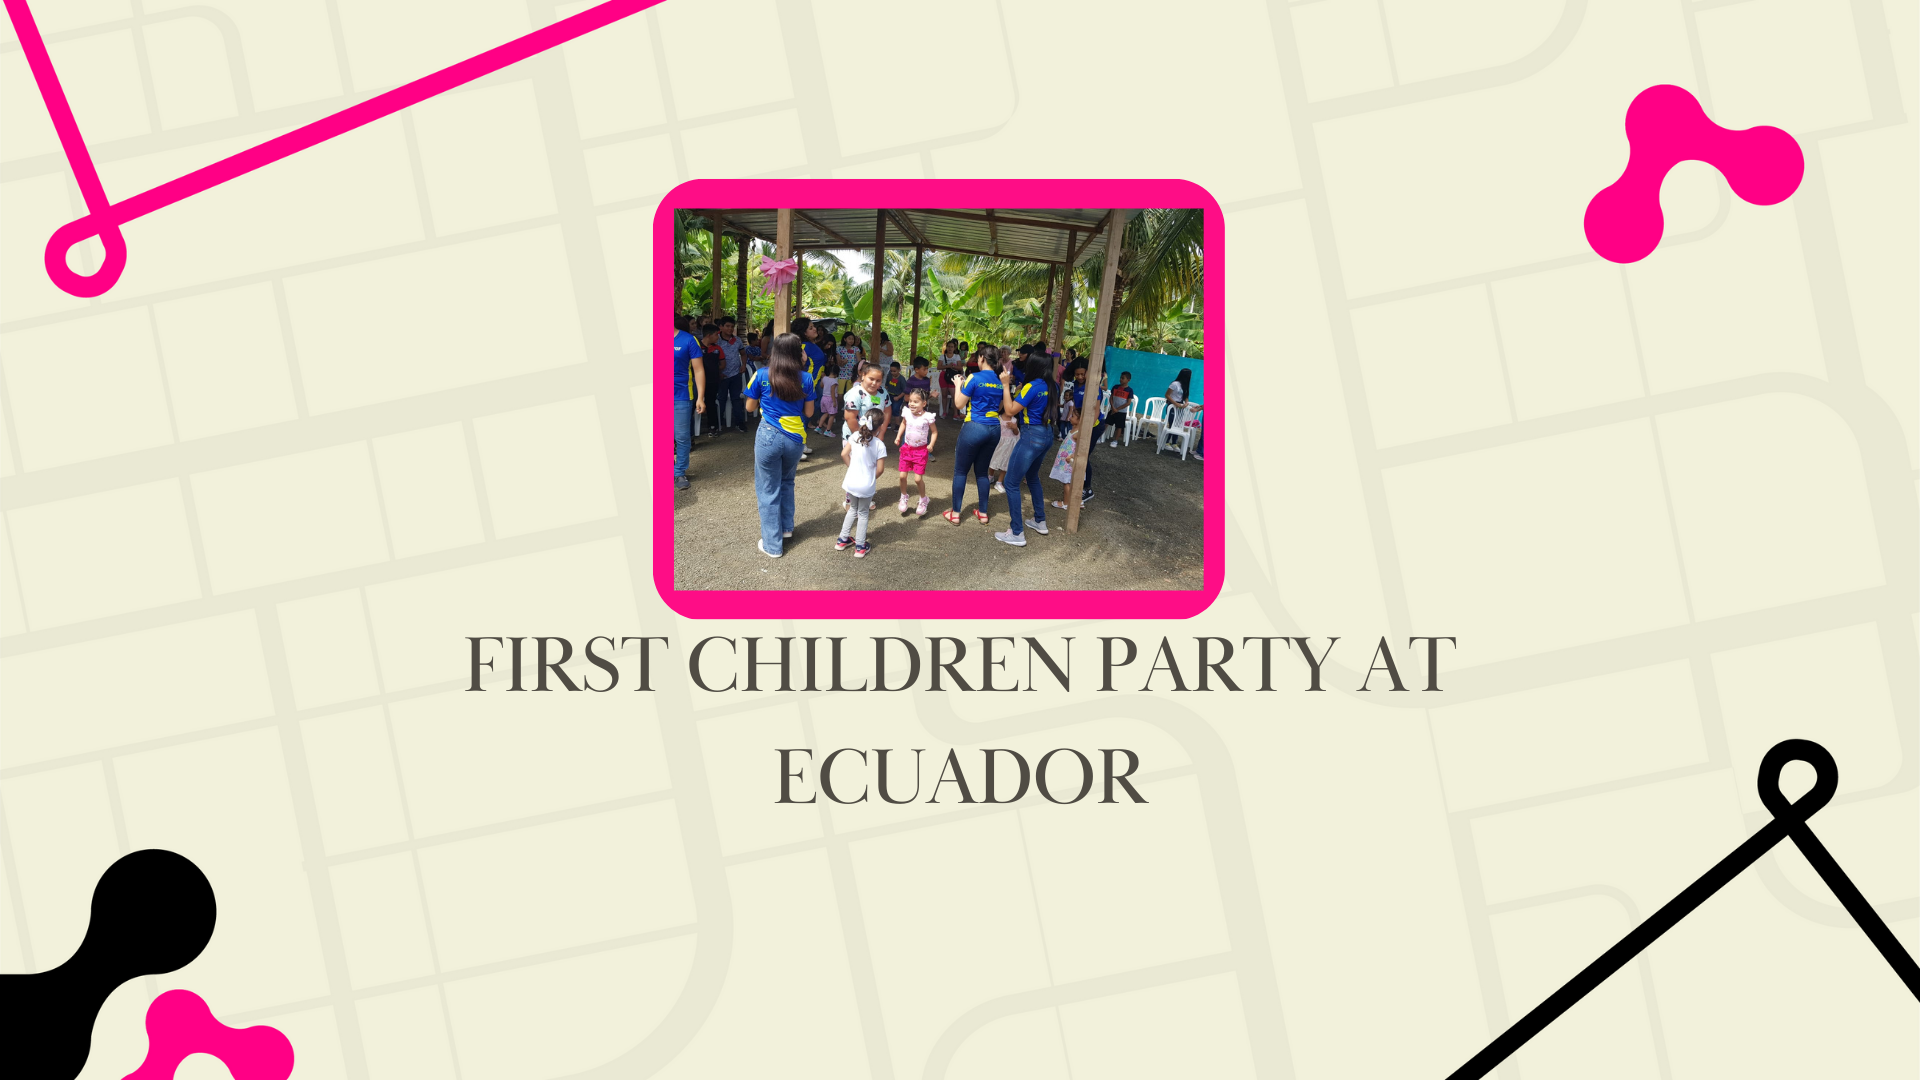 First Children Party at Ecuador